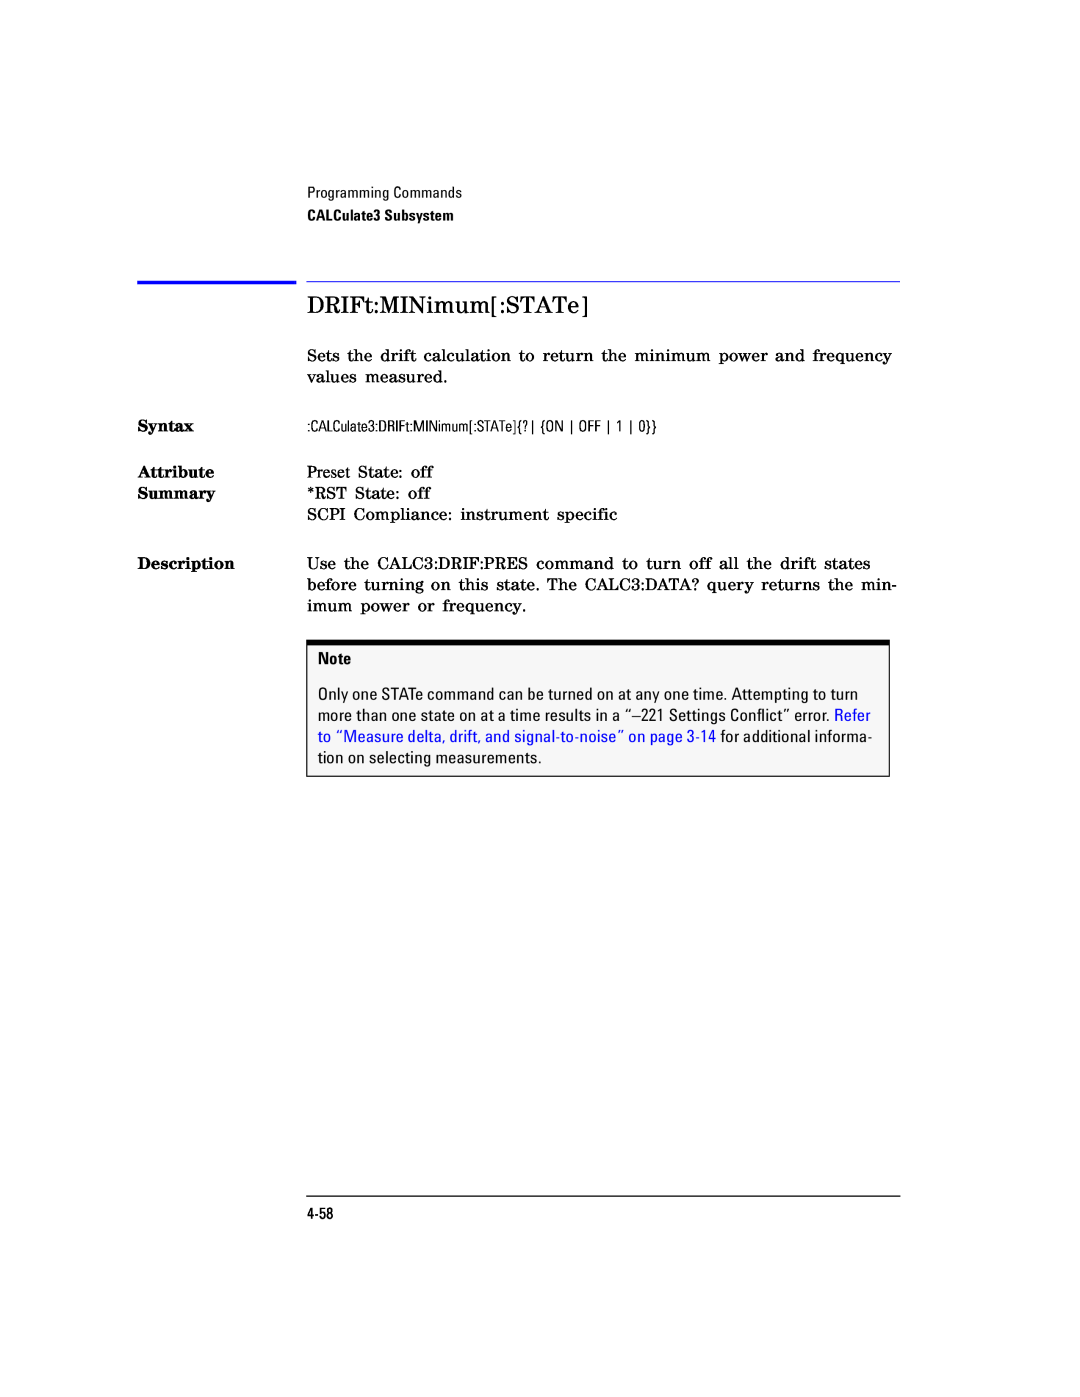 Agilent Technologies Agilent 86120C manual DRIFtMINimumSTATe, Syntax, Attribute, Summary, Description 